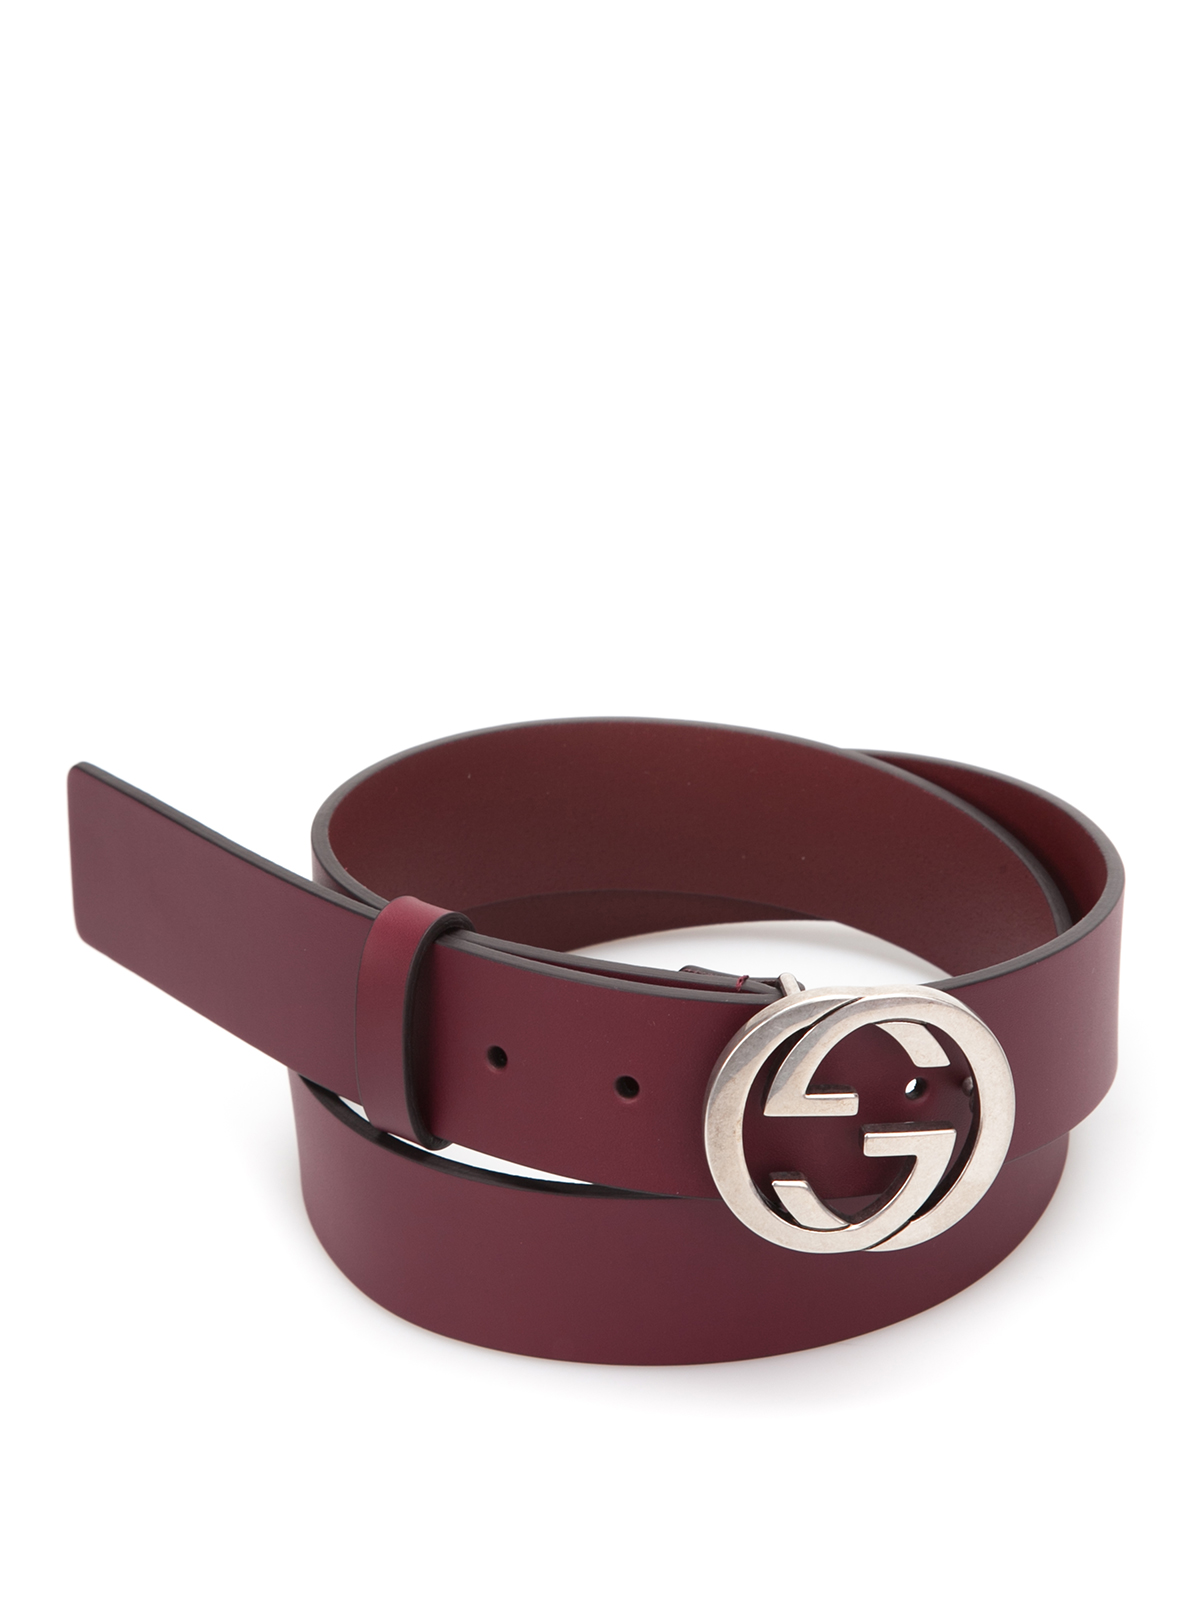 leather belt with interlocking g